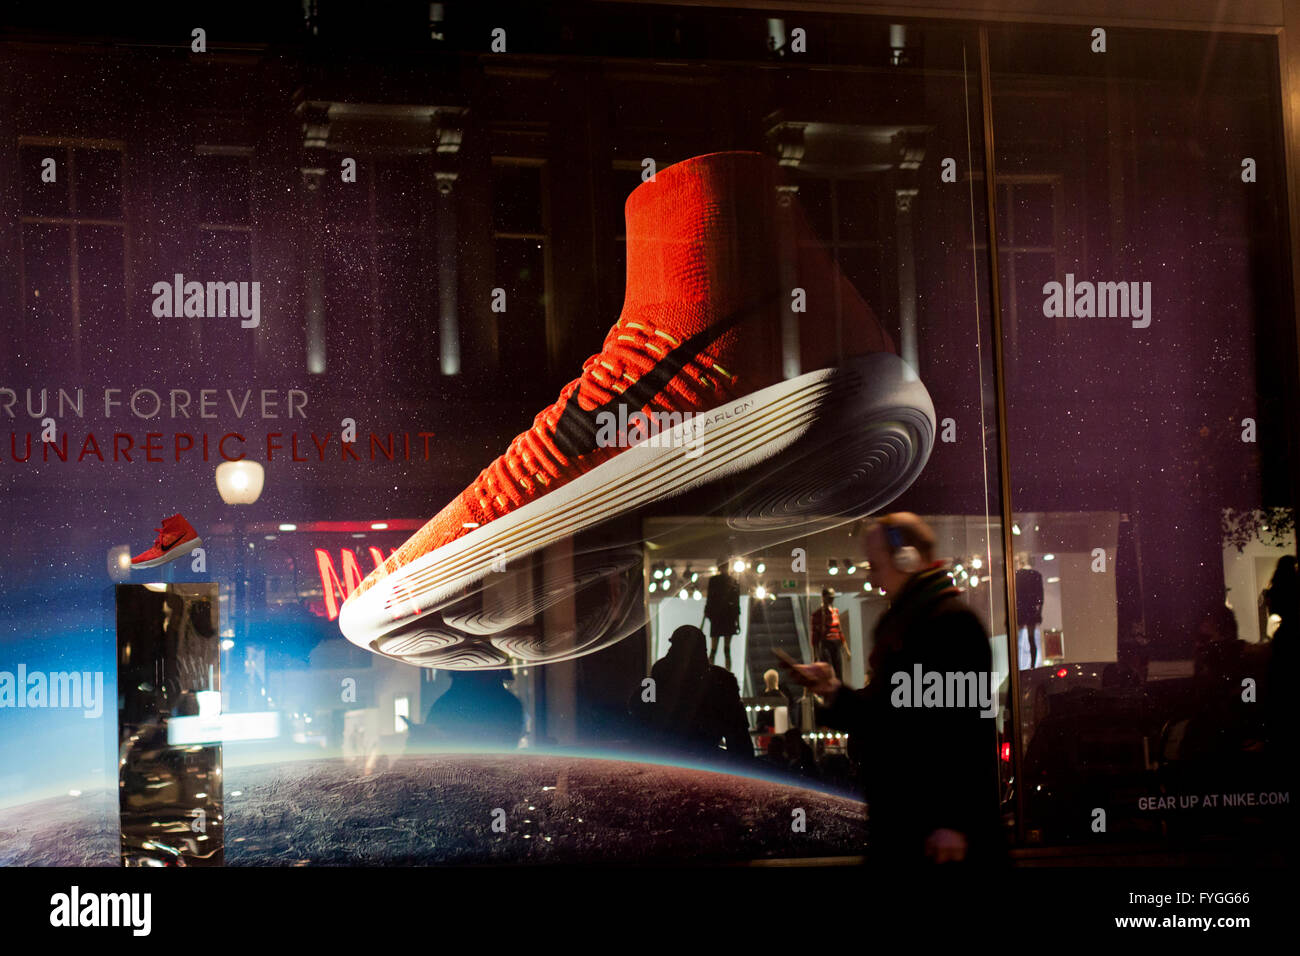 Store window with Nike shoe in London, UK Stock Photo - Alamy